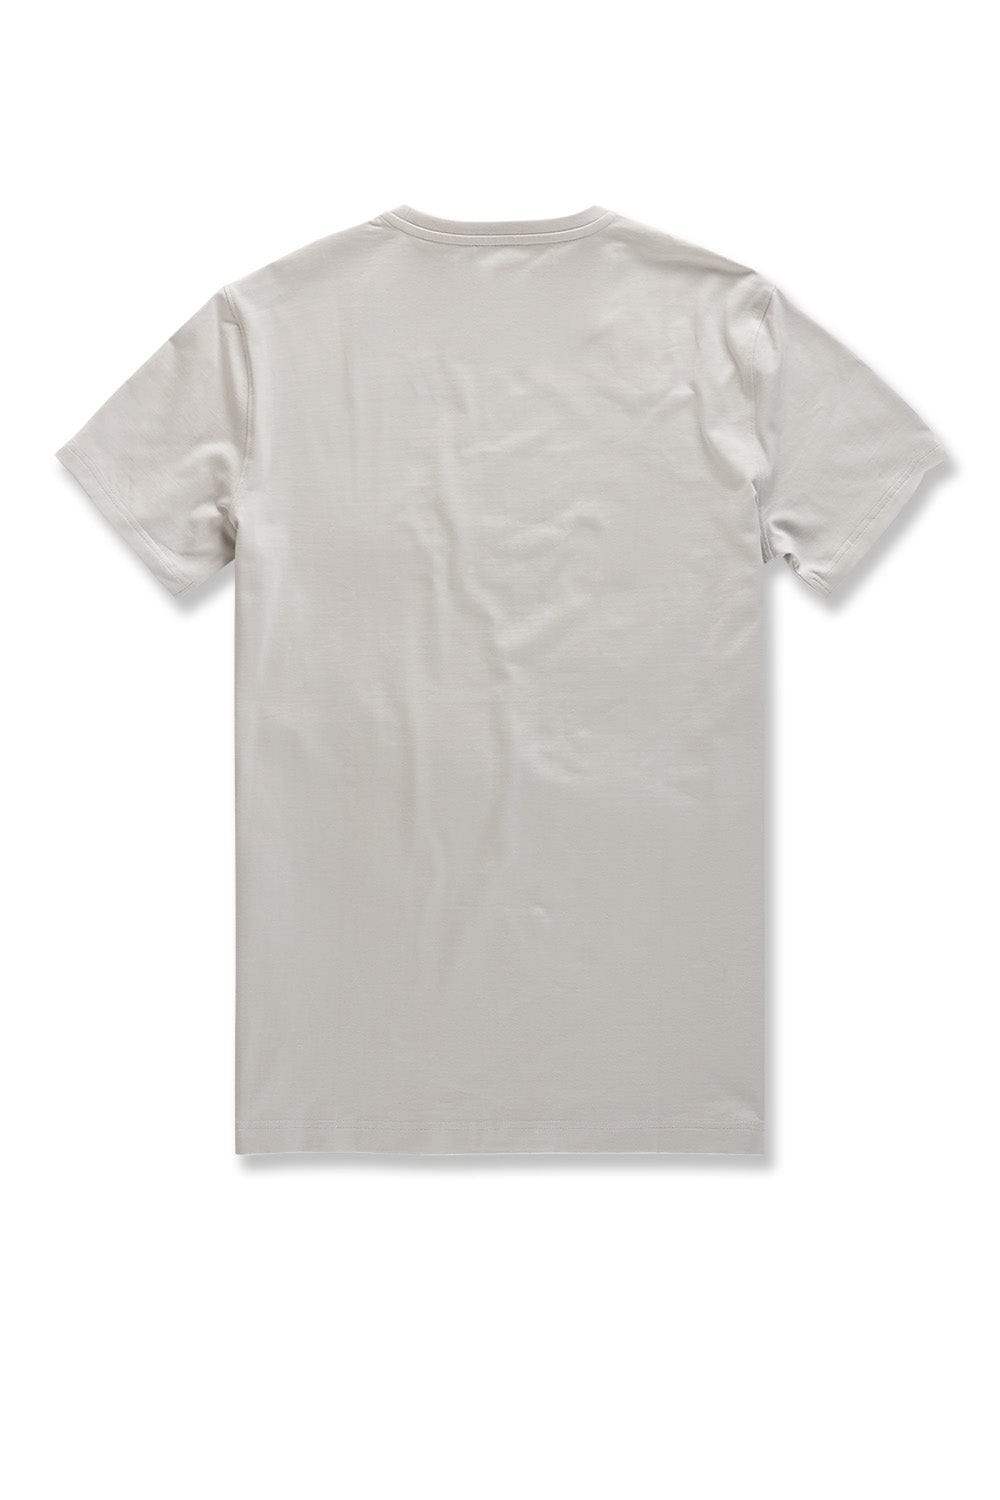 JC Big Men Big Men's Premium Crewneck T-Shirt (Name Your Price)